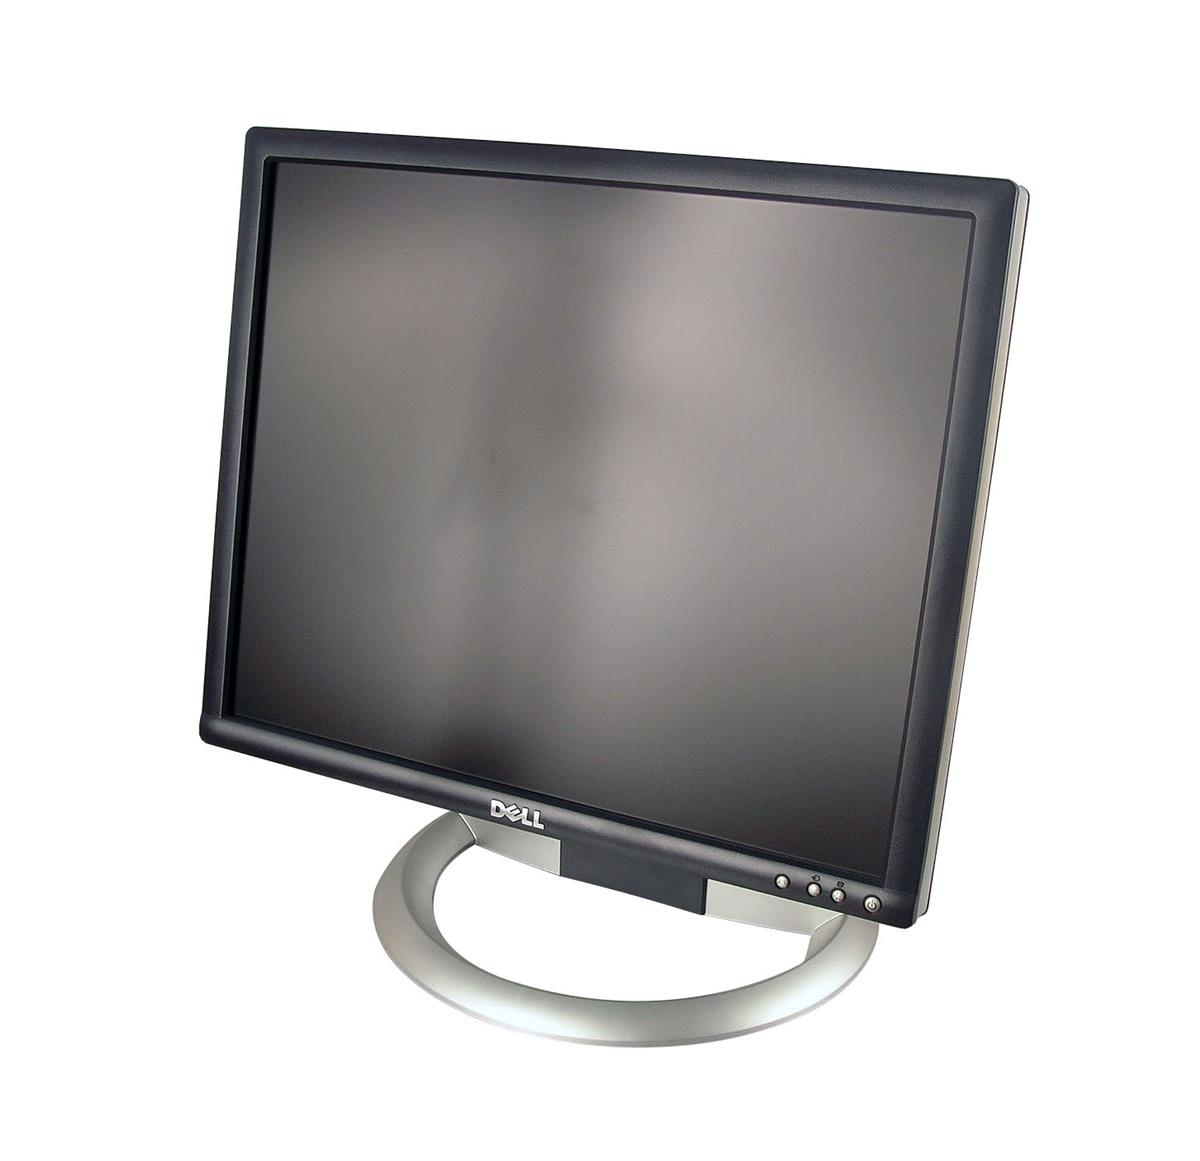 T6116 Dell 19-inch UltraSharp 1280 x 1024 at 60Hz TFT Flat Panel LCD Monitor (Refurbished)